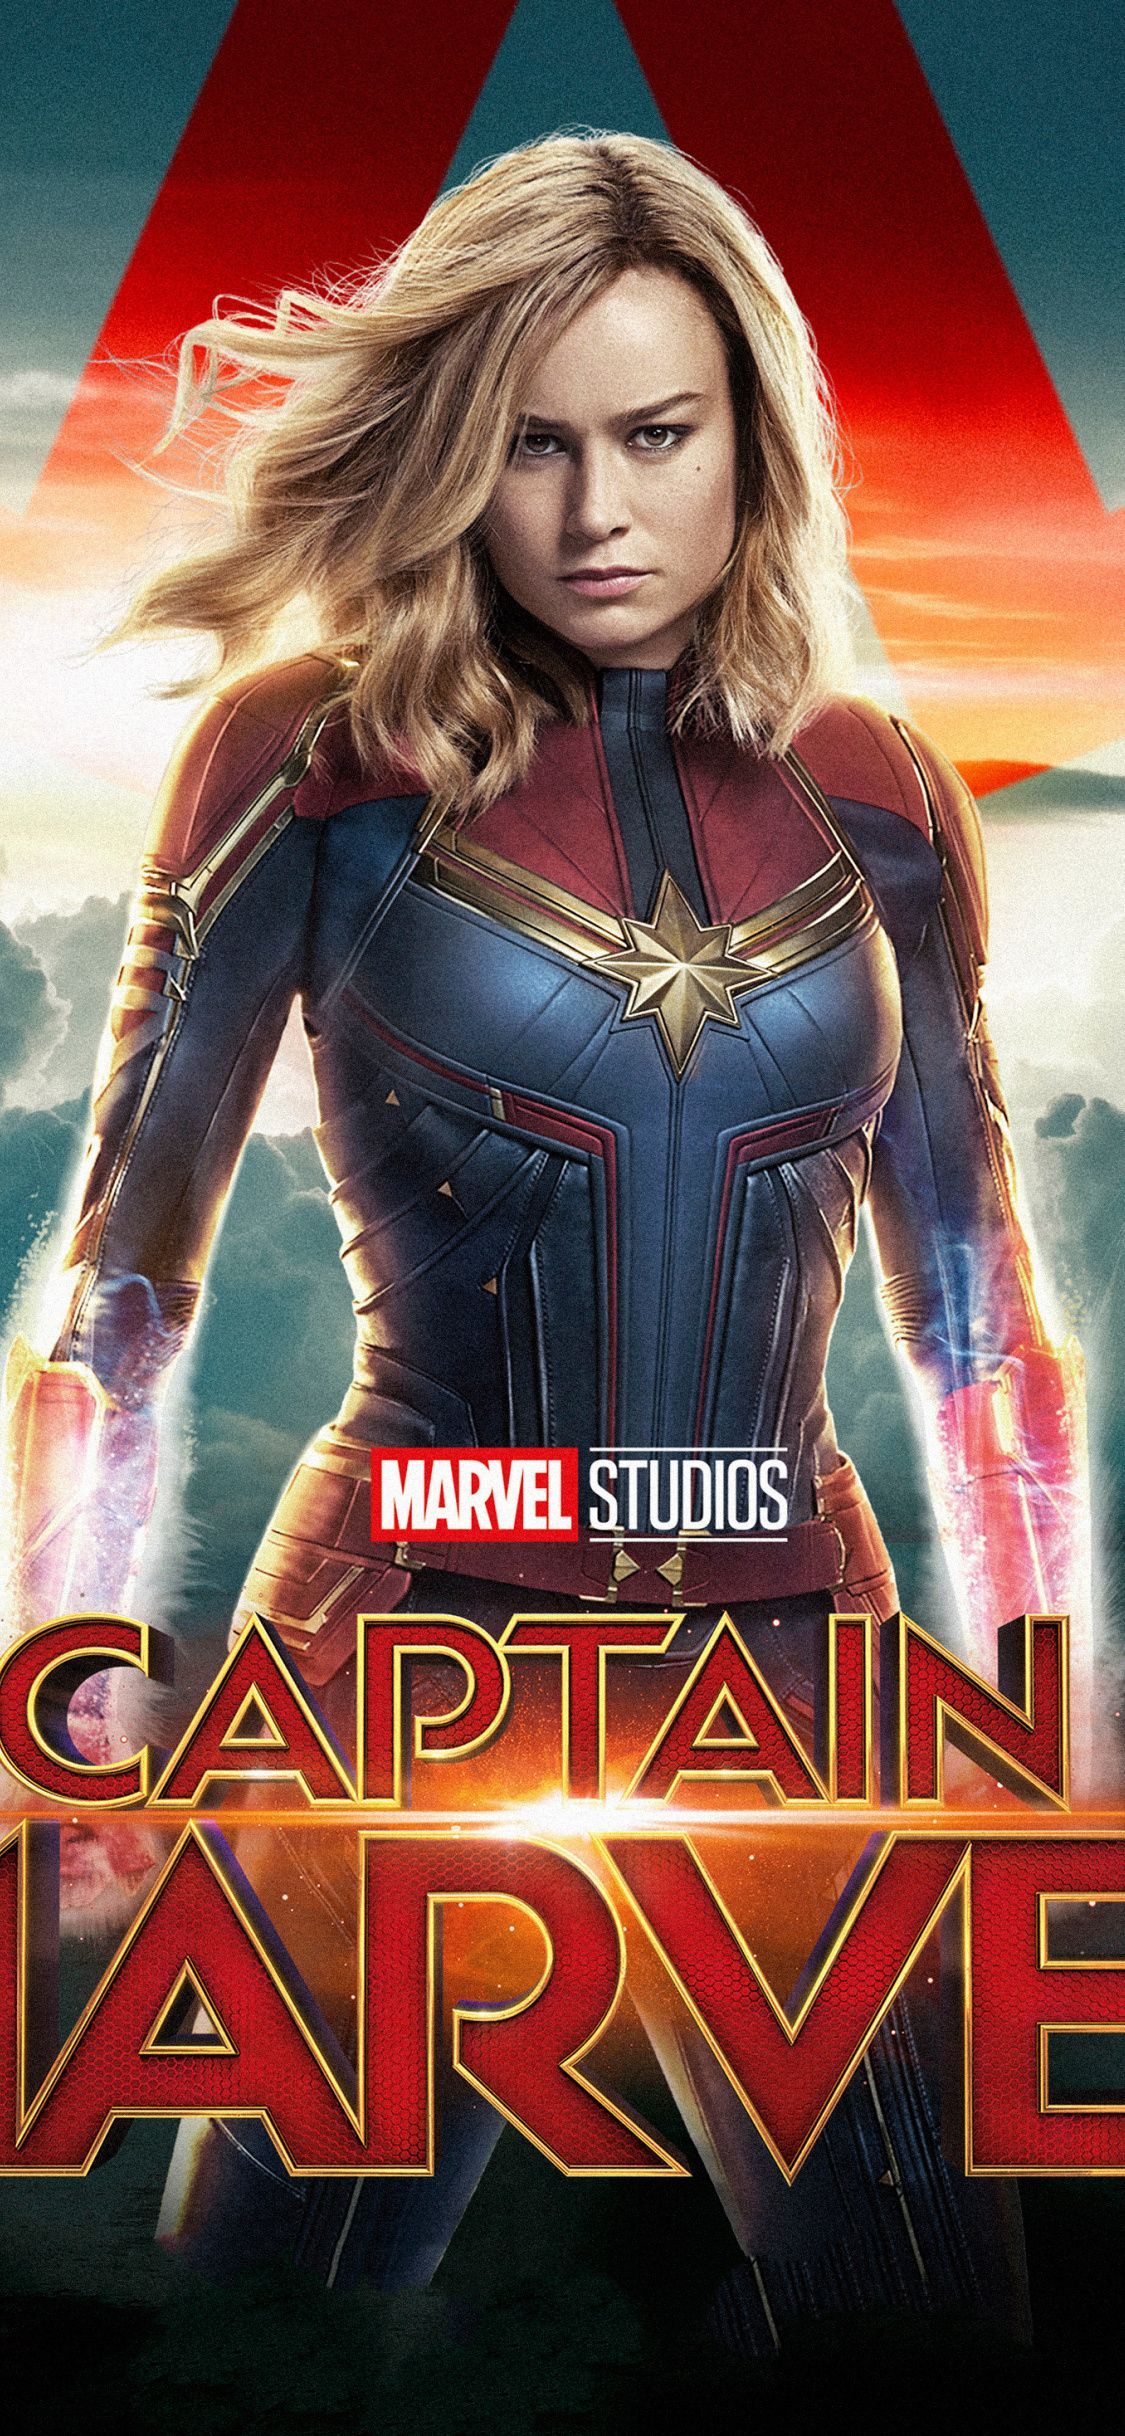 Download 1125x2436 wallpaper movie, superhero, actress, captain marvel, iphone x 1125x2436 HD image, background,. Marvel heroines, Captain marvel, Marvel posters